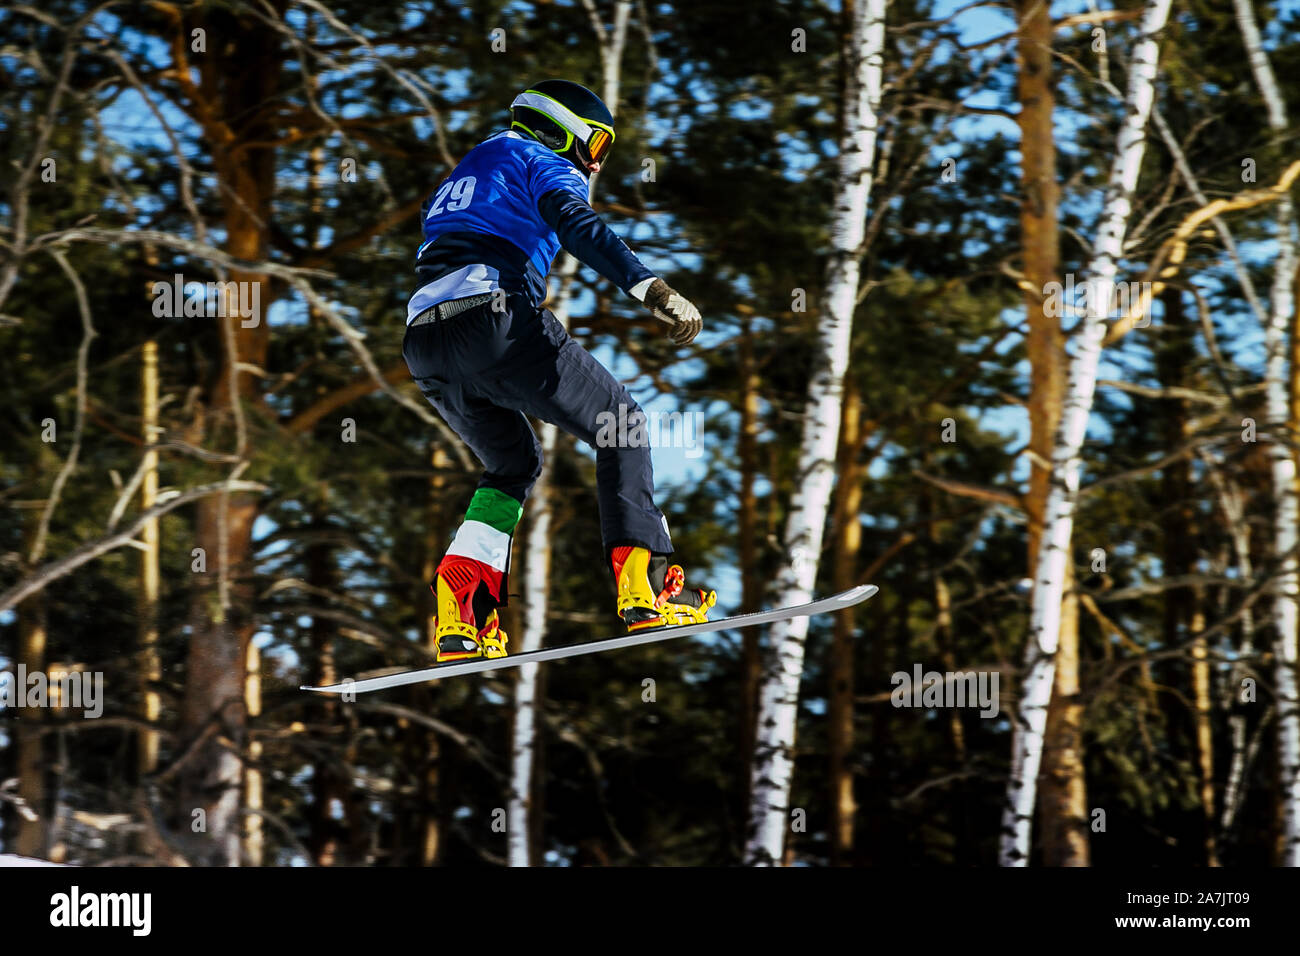 italian athlete snowboarder jump boardercross competition Stock Photo